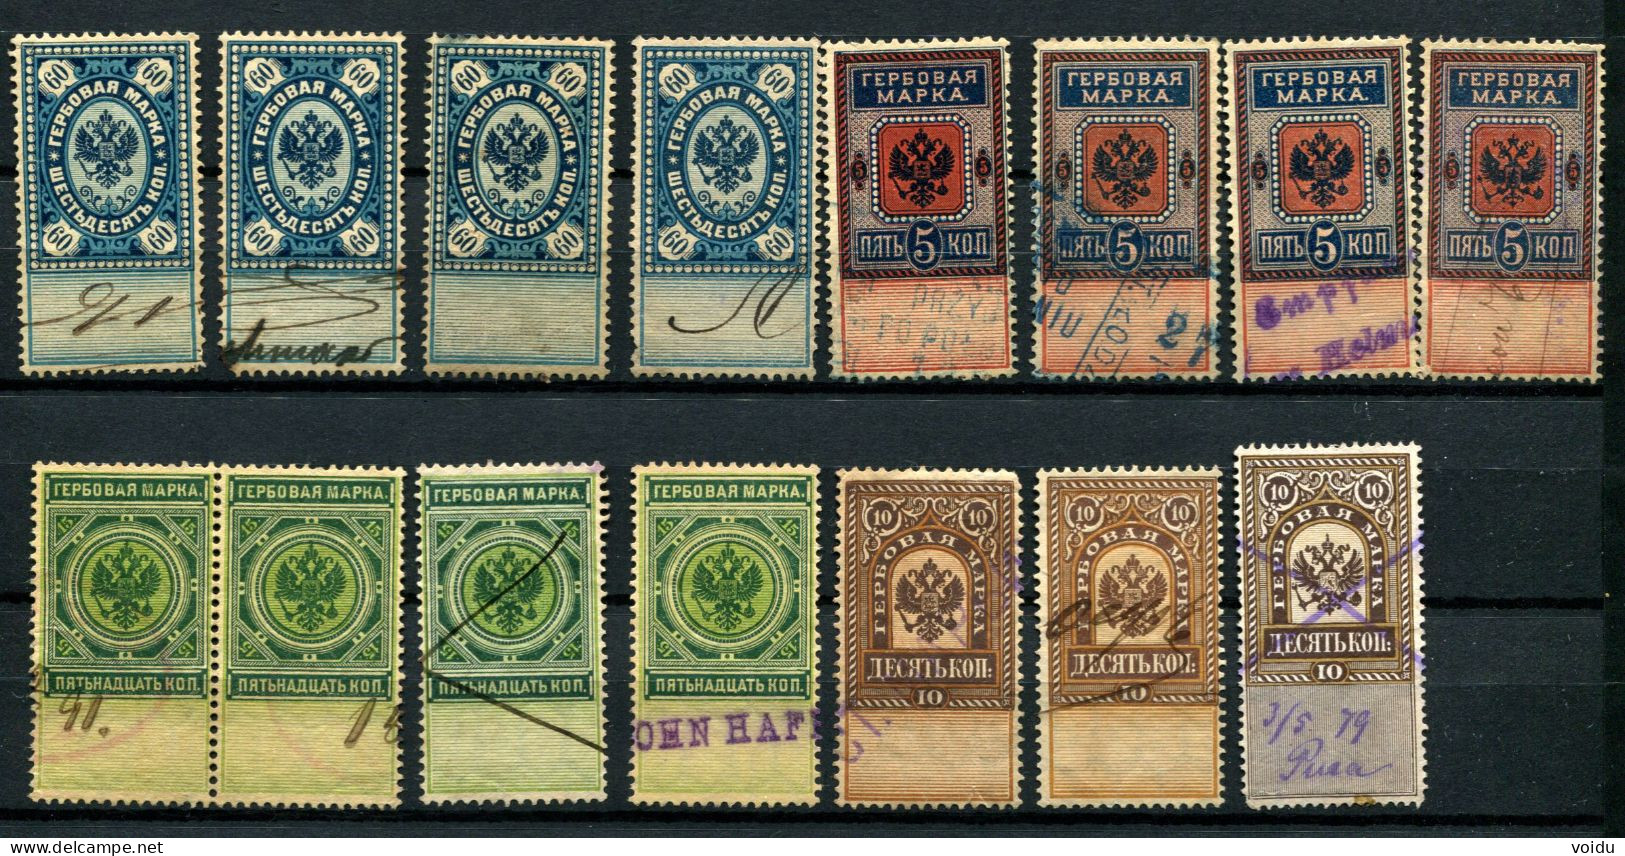 Russia Revenue Stamps - Revenue Stamps